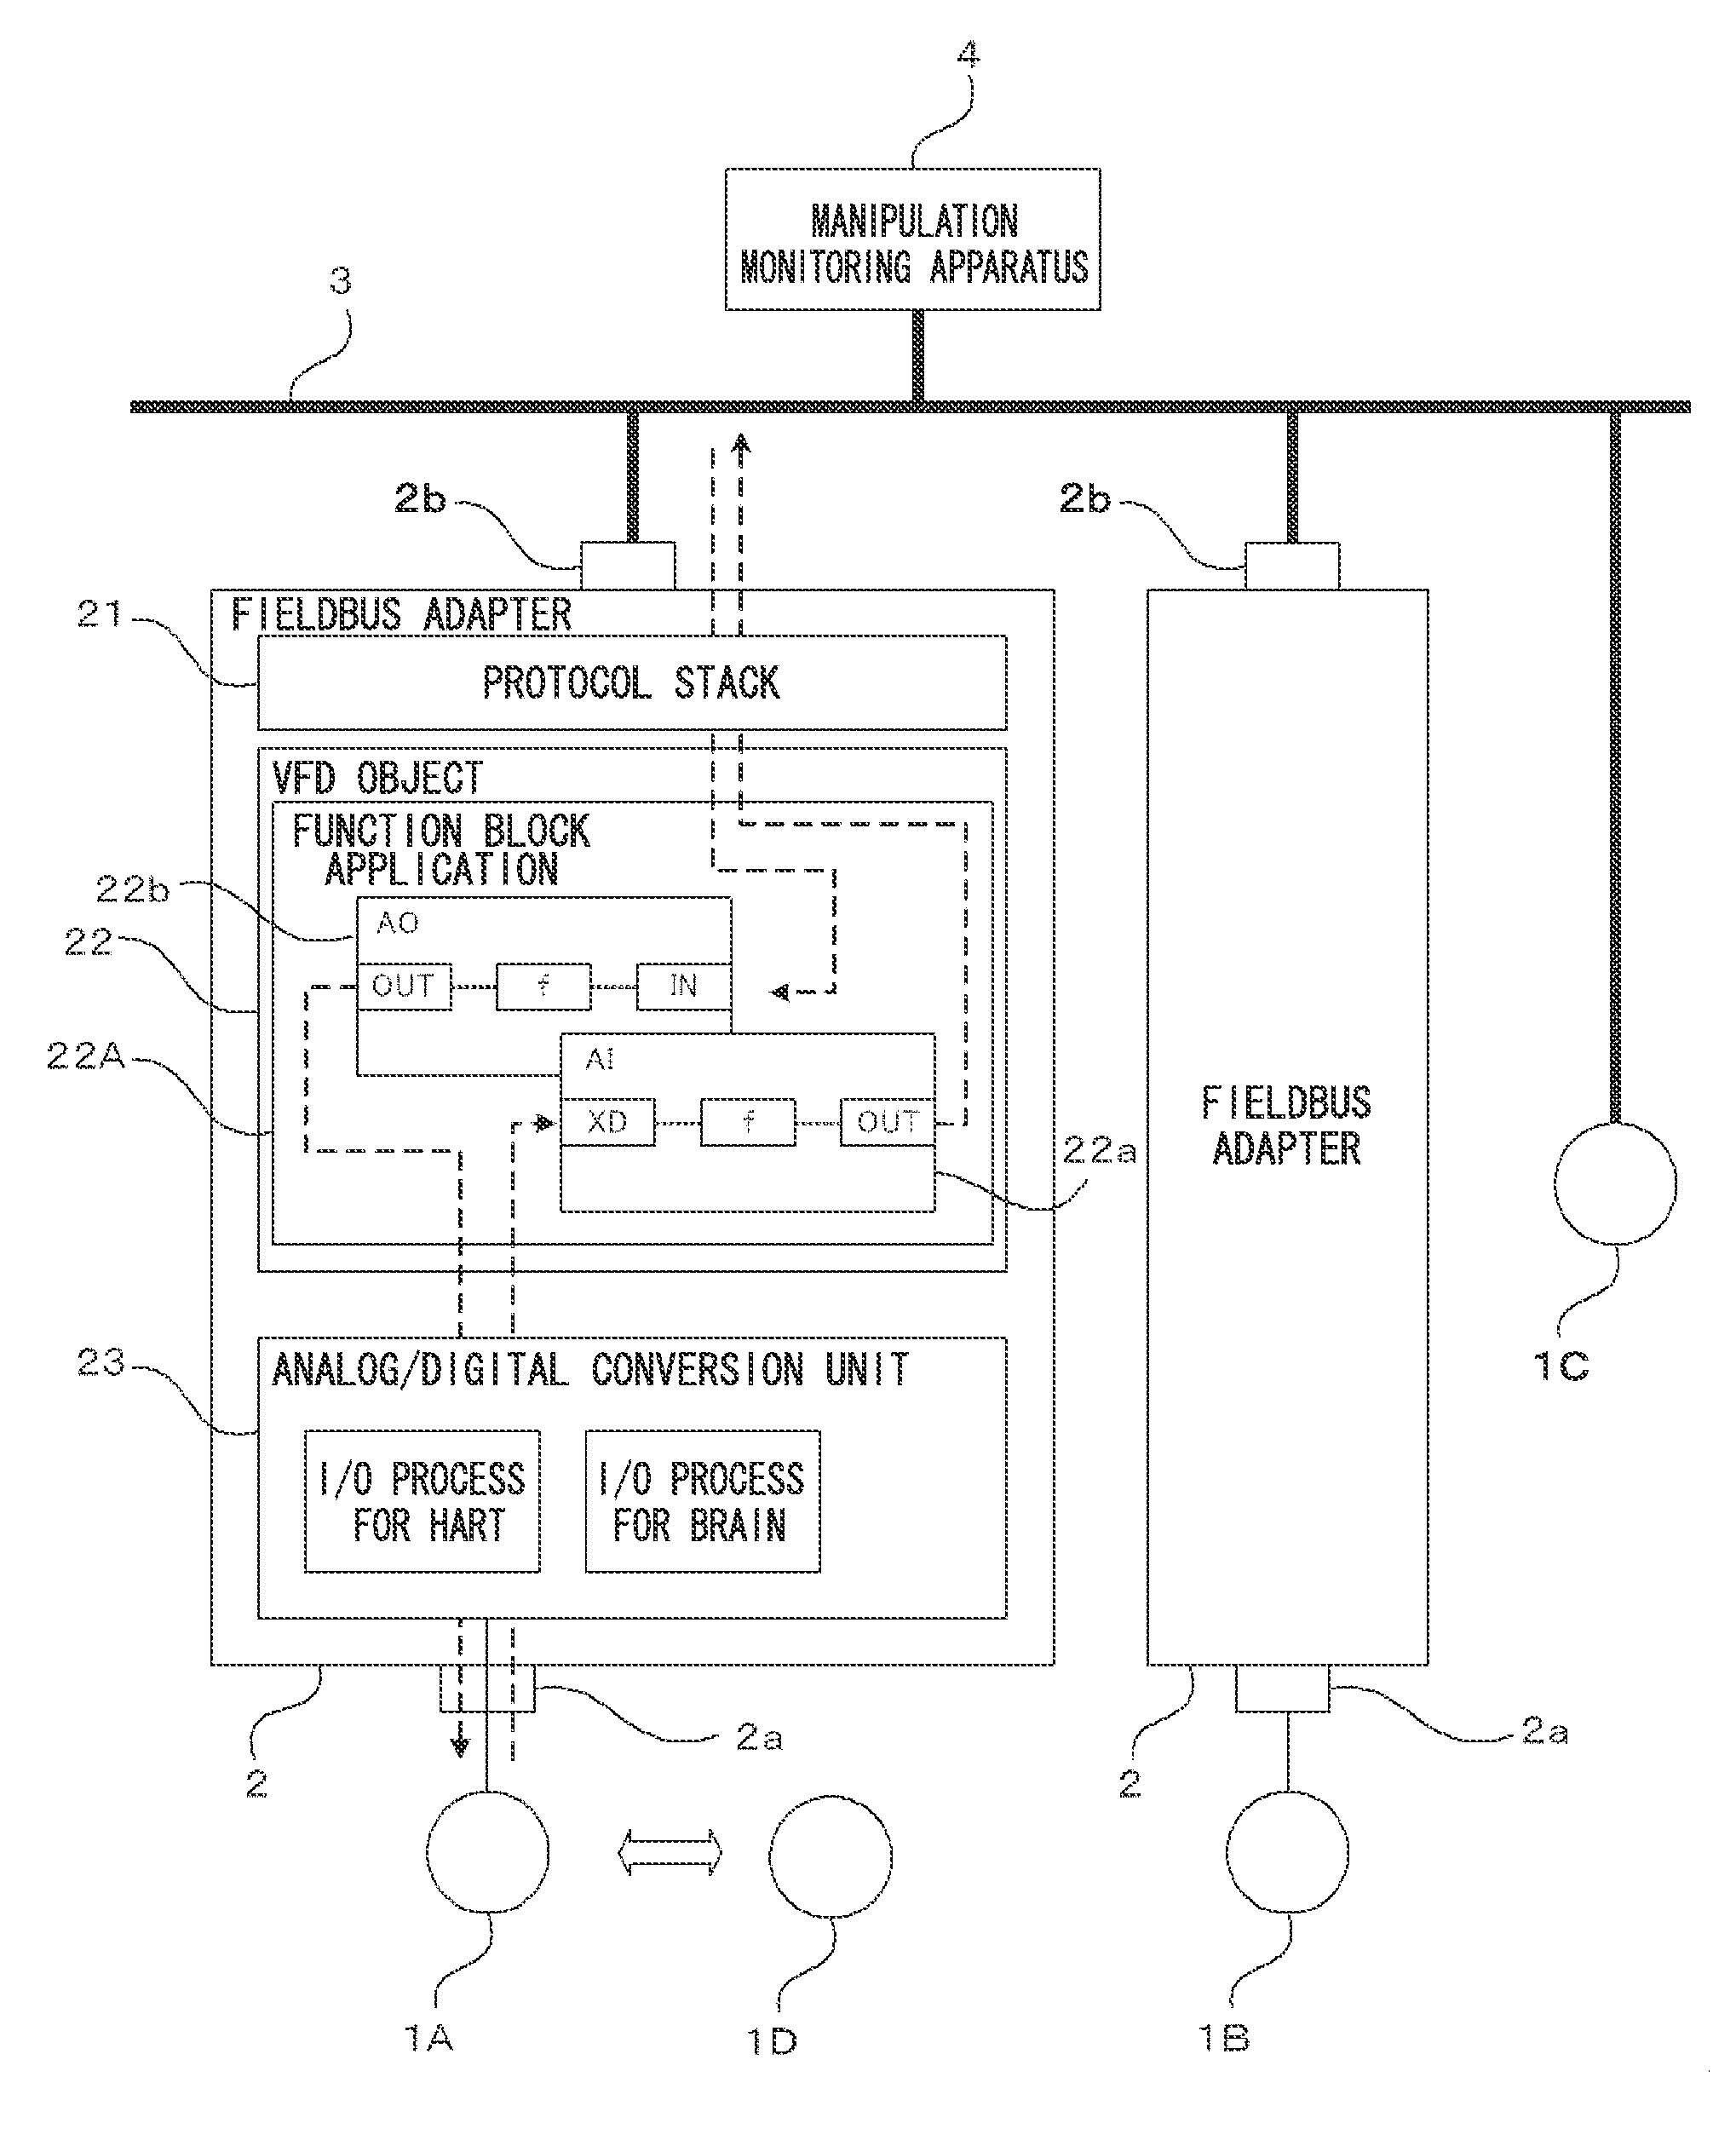 Fieldbus adapter and method of using fieldbus adapter